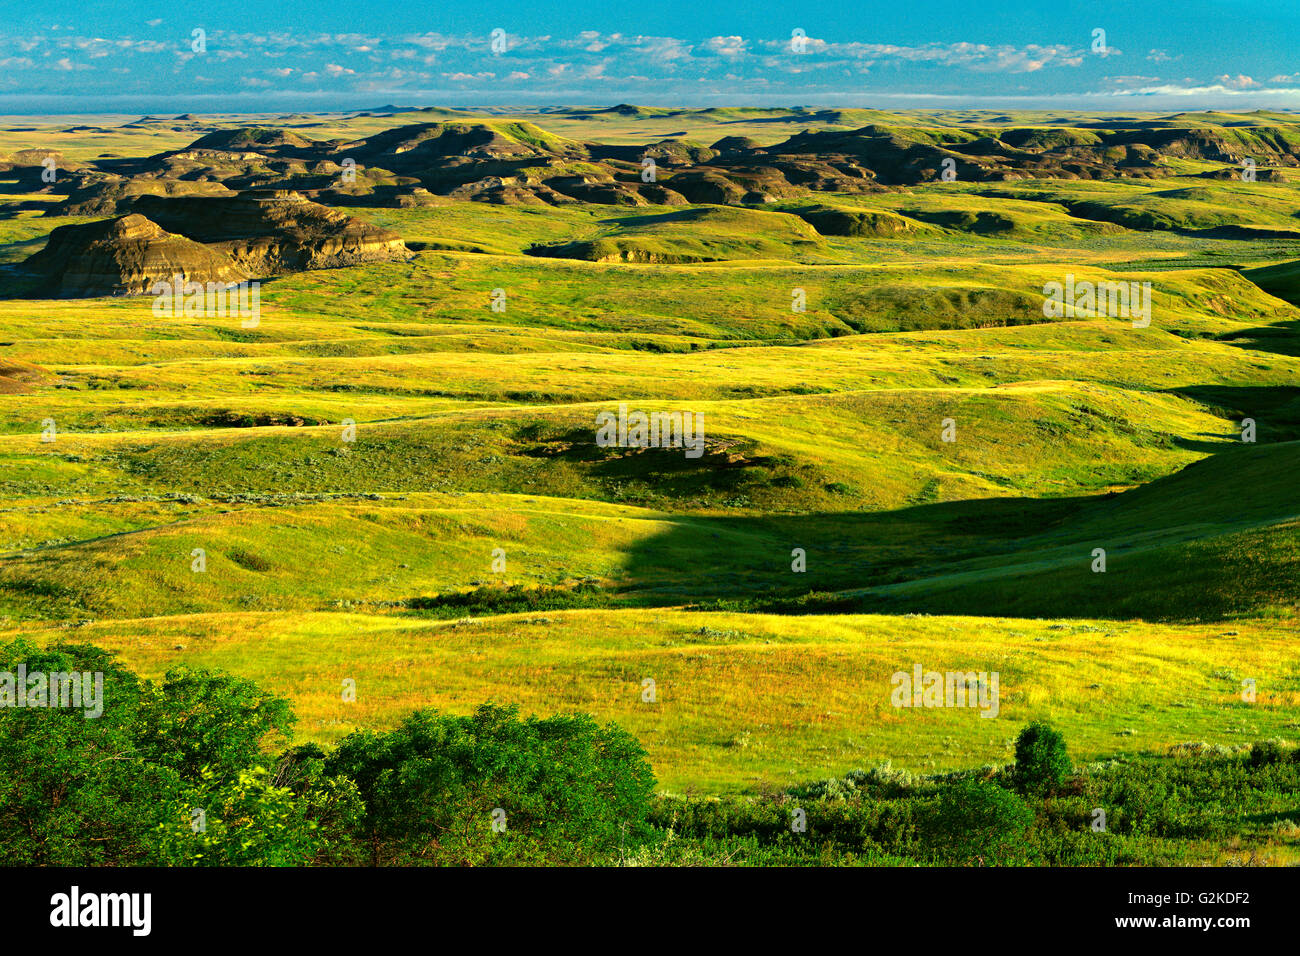 Stitched Panorama of teh Killdeer Badlands Grasslands National Park Saskatchewan Canada Stock Photo